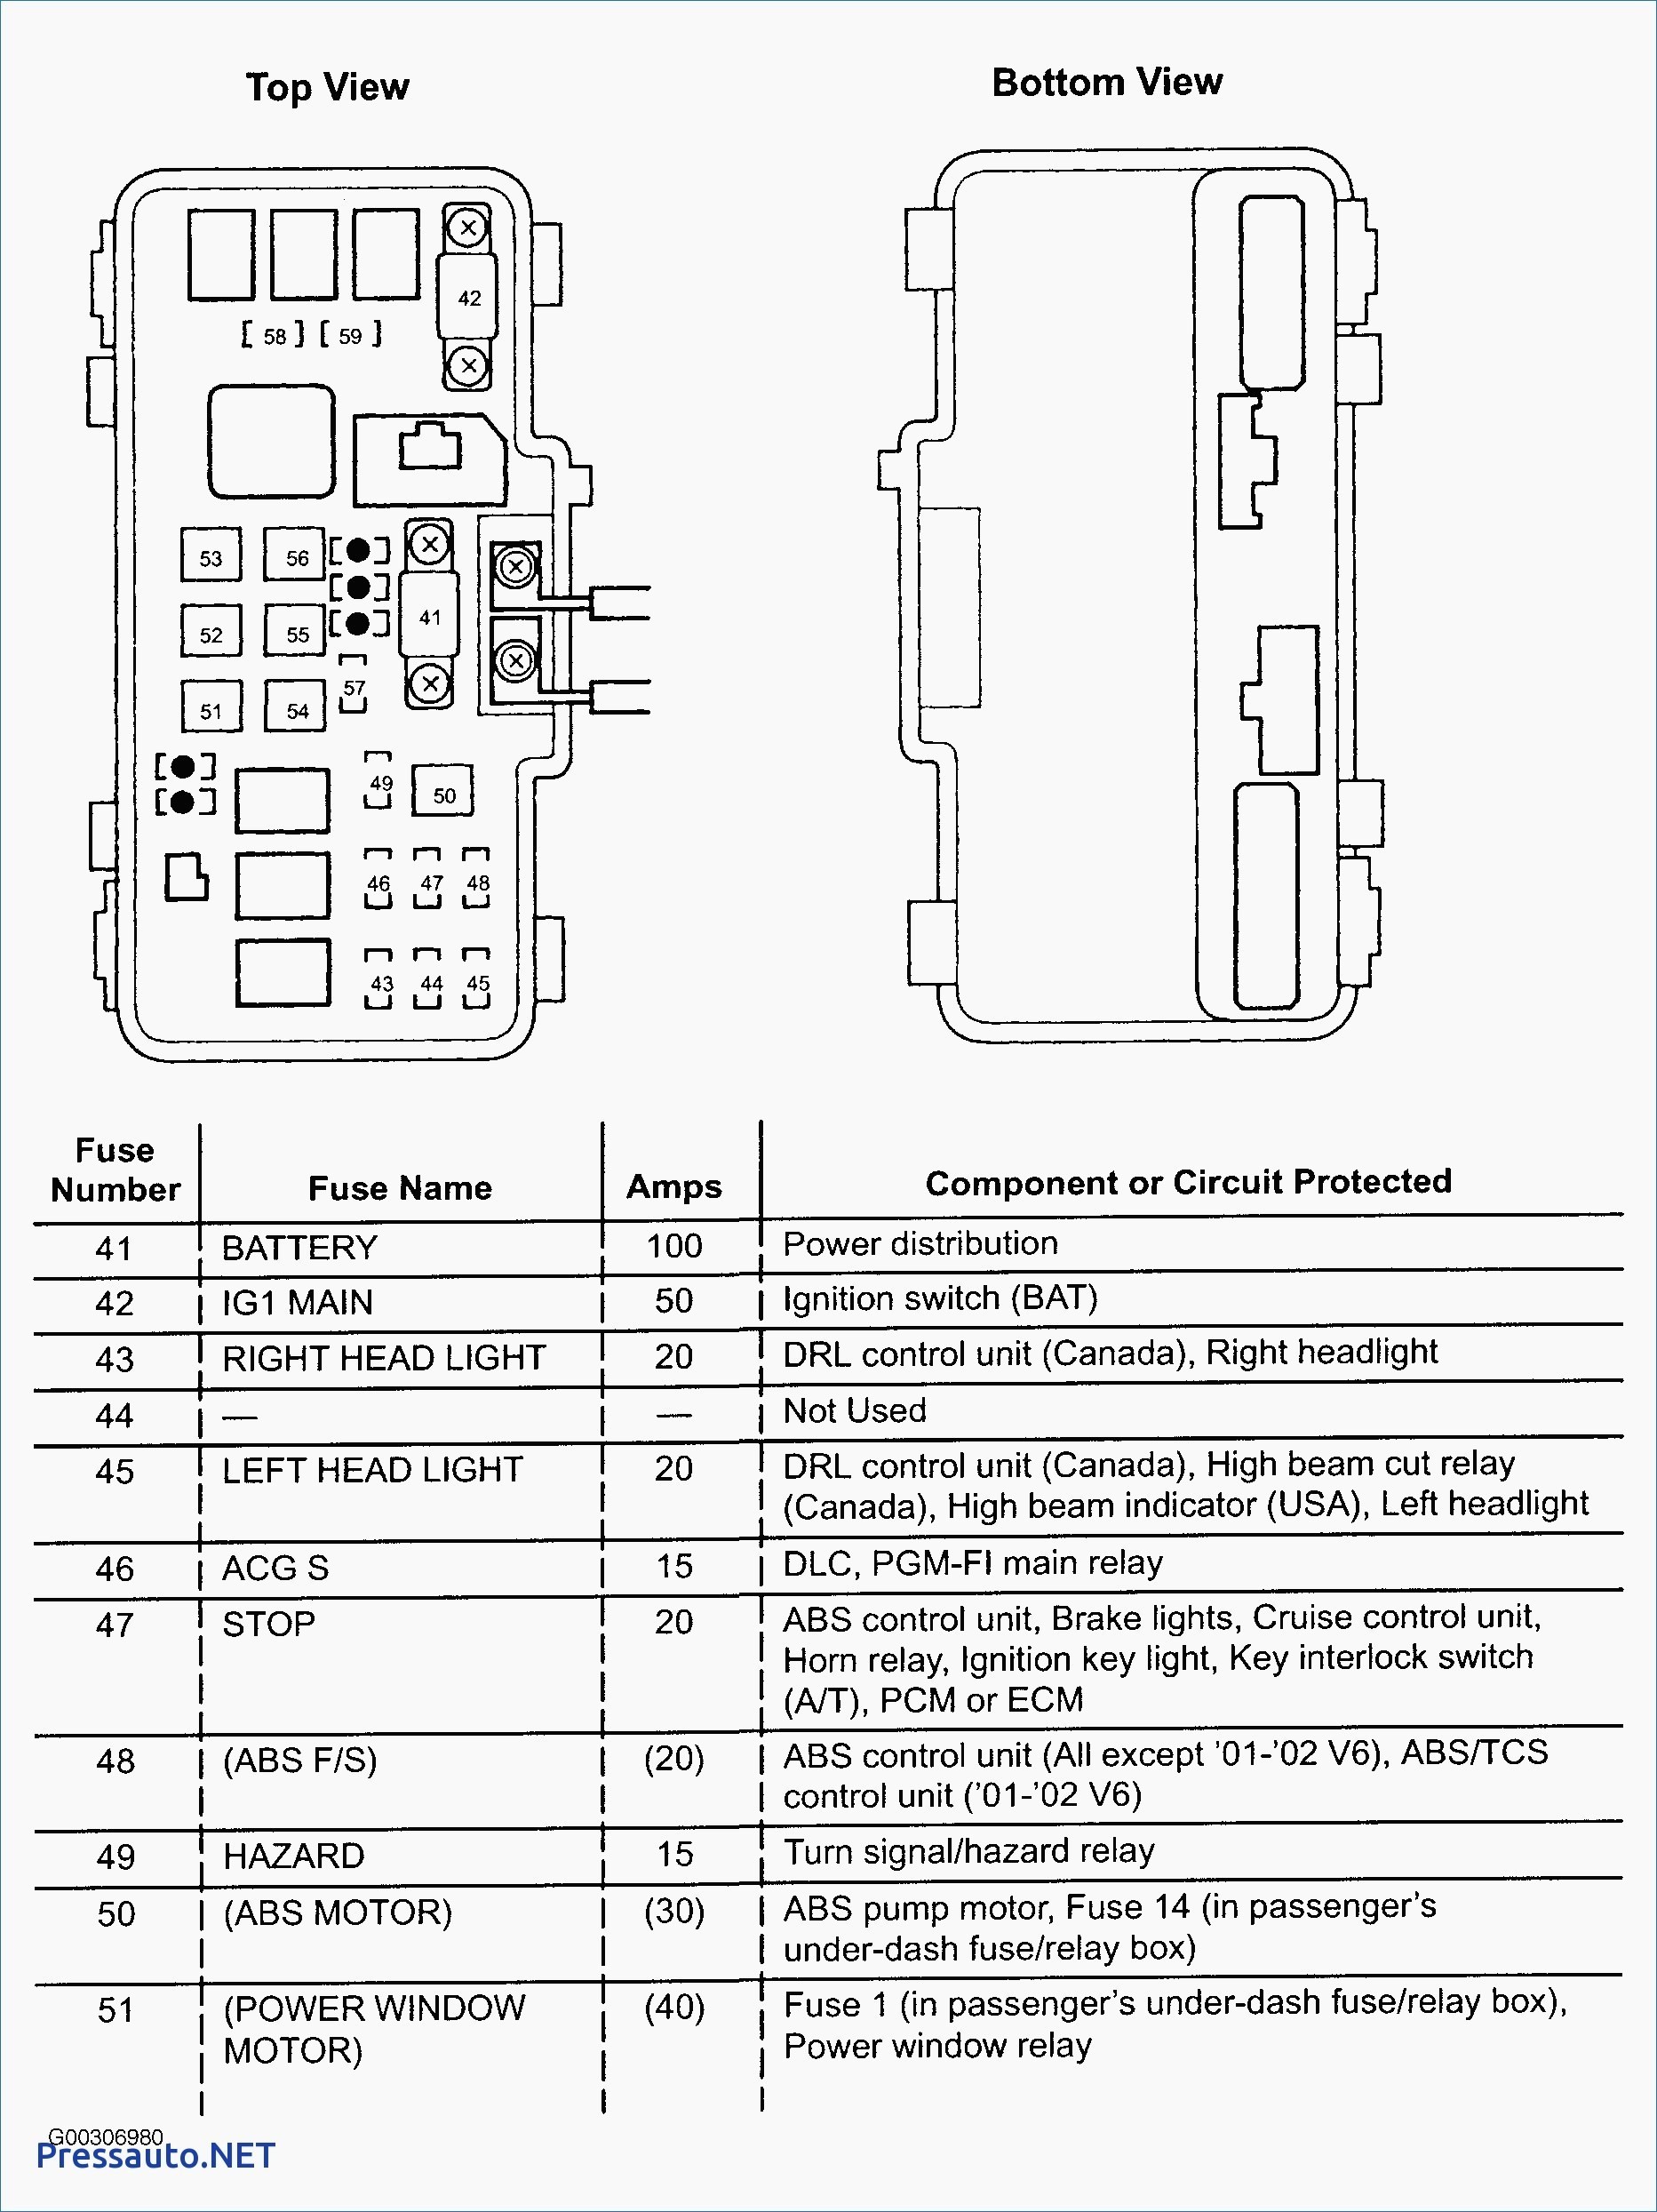 2004 Honda Accord Wiring Diagram 2002 Honda Accord Wiring Diagram Download Of 2004 Honda Accord Wiring Diagram